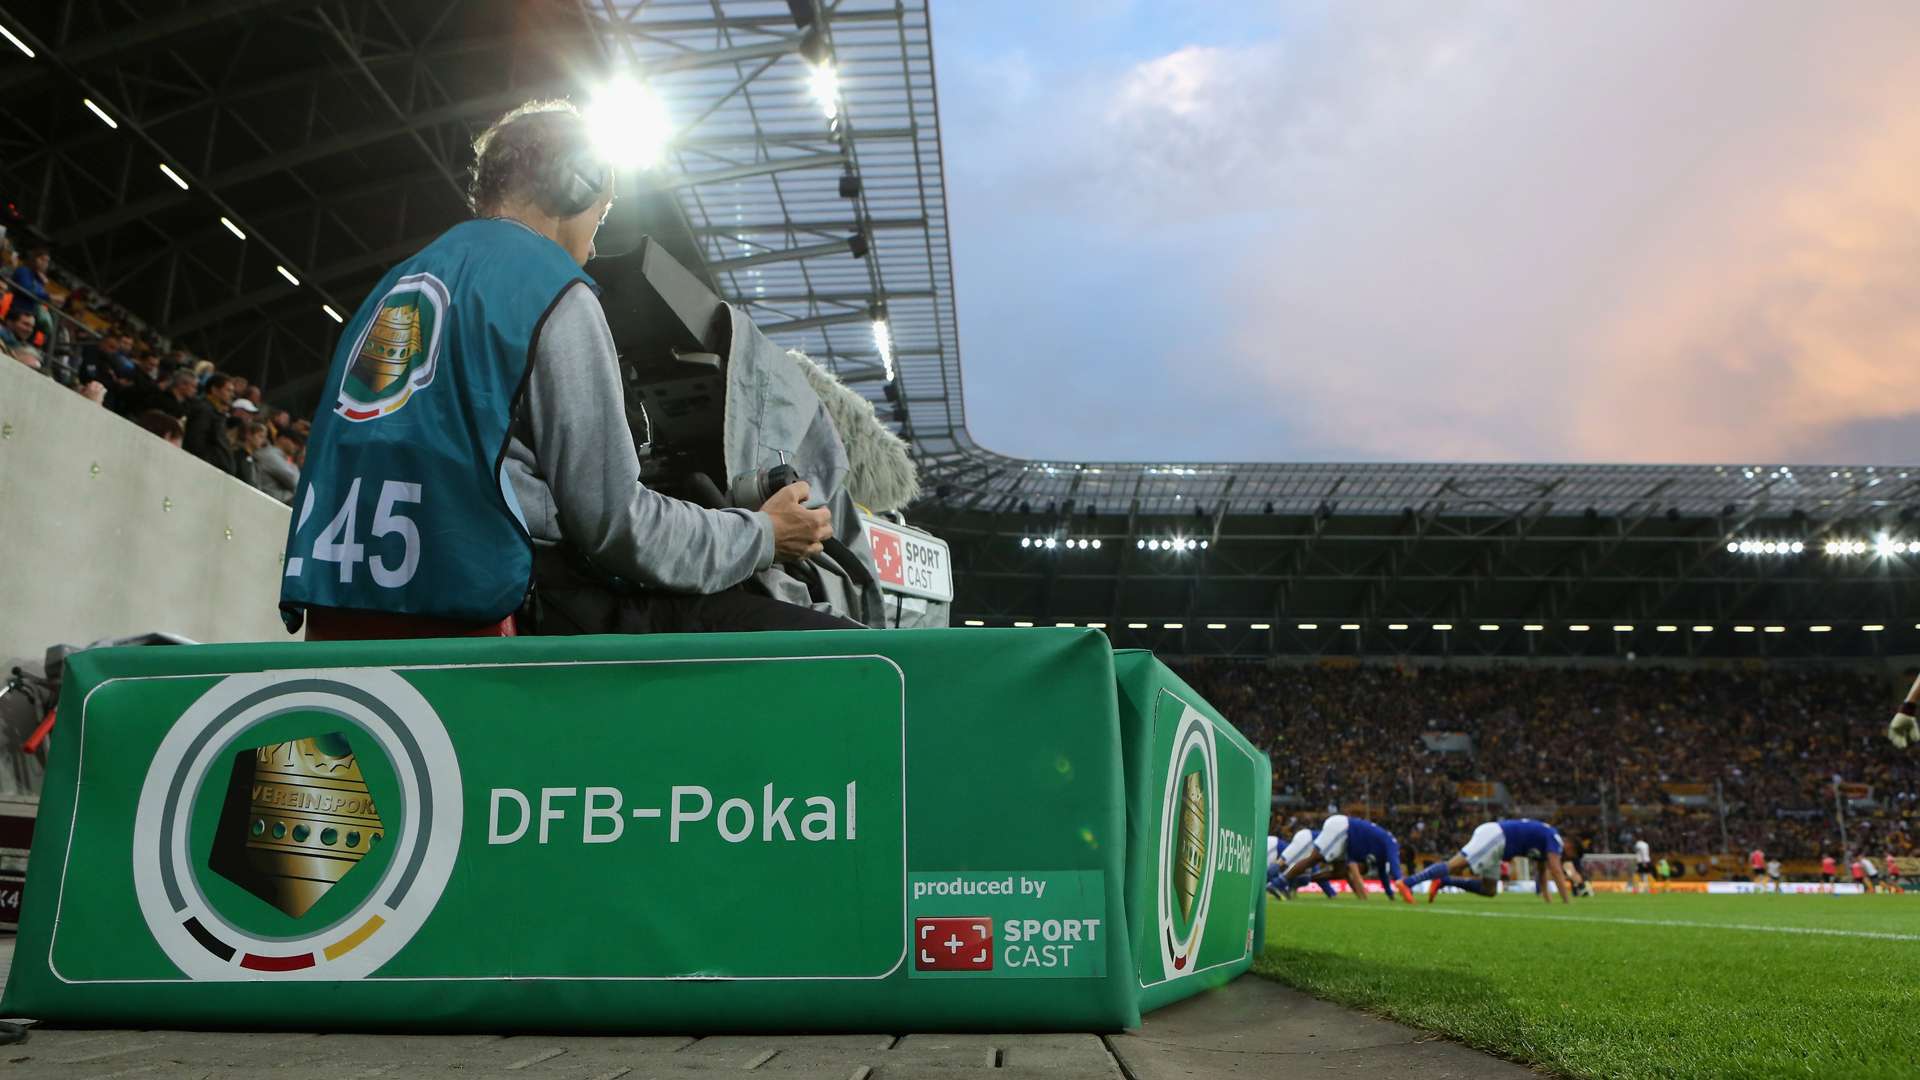 Kamera Camera DFB-Pokal